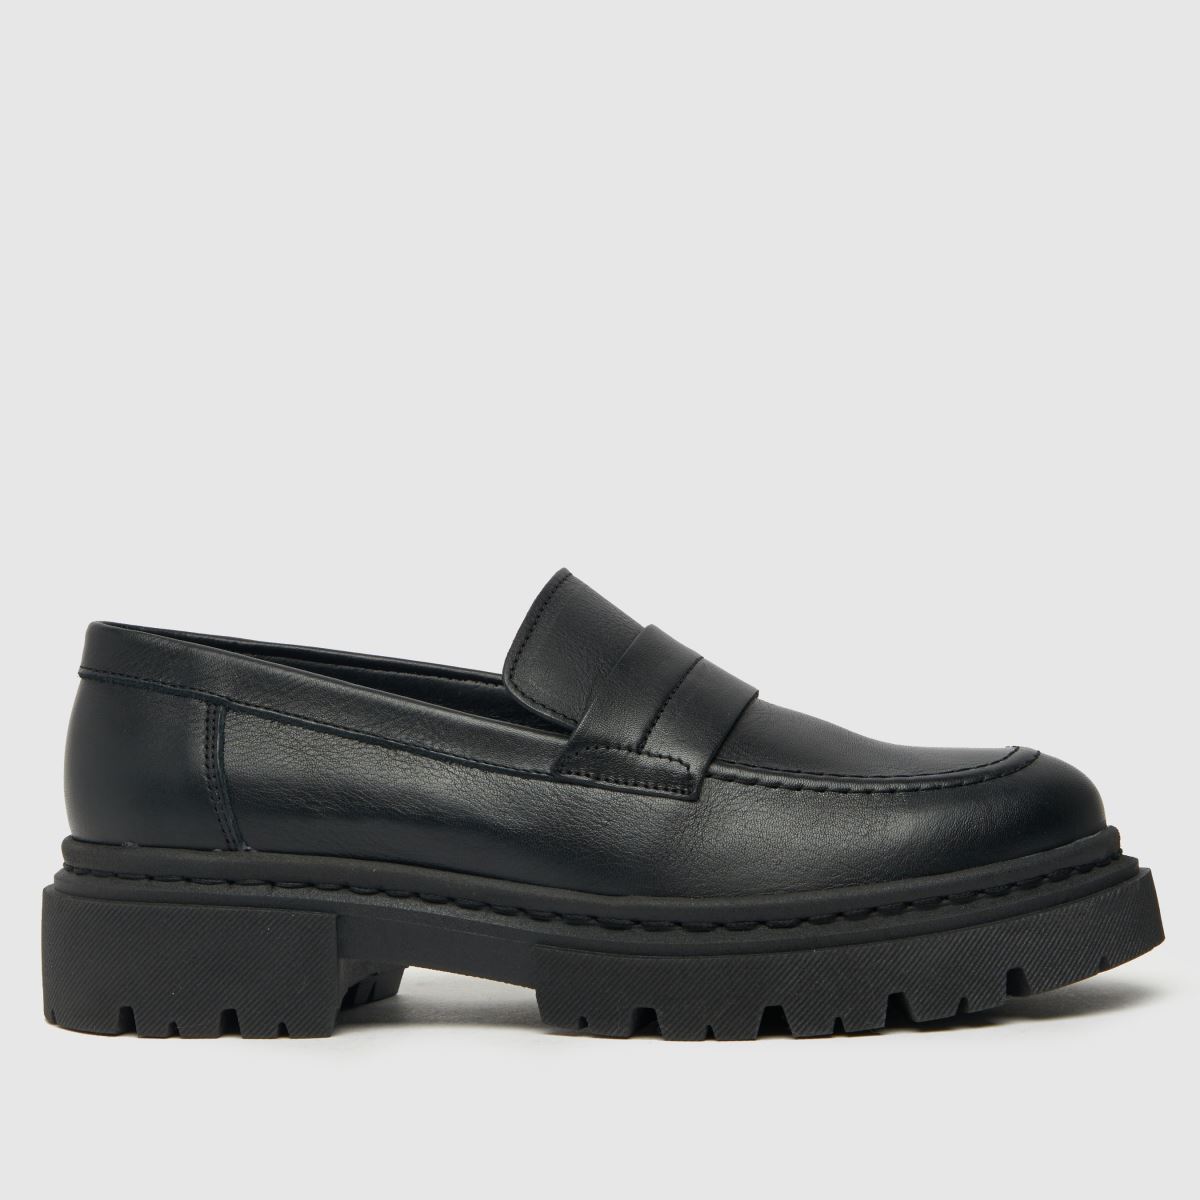 HUDSON LONDON remi loafer flat shoes in black